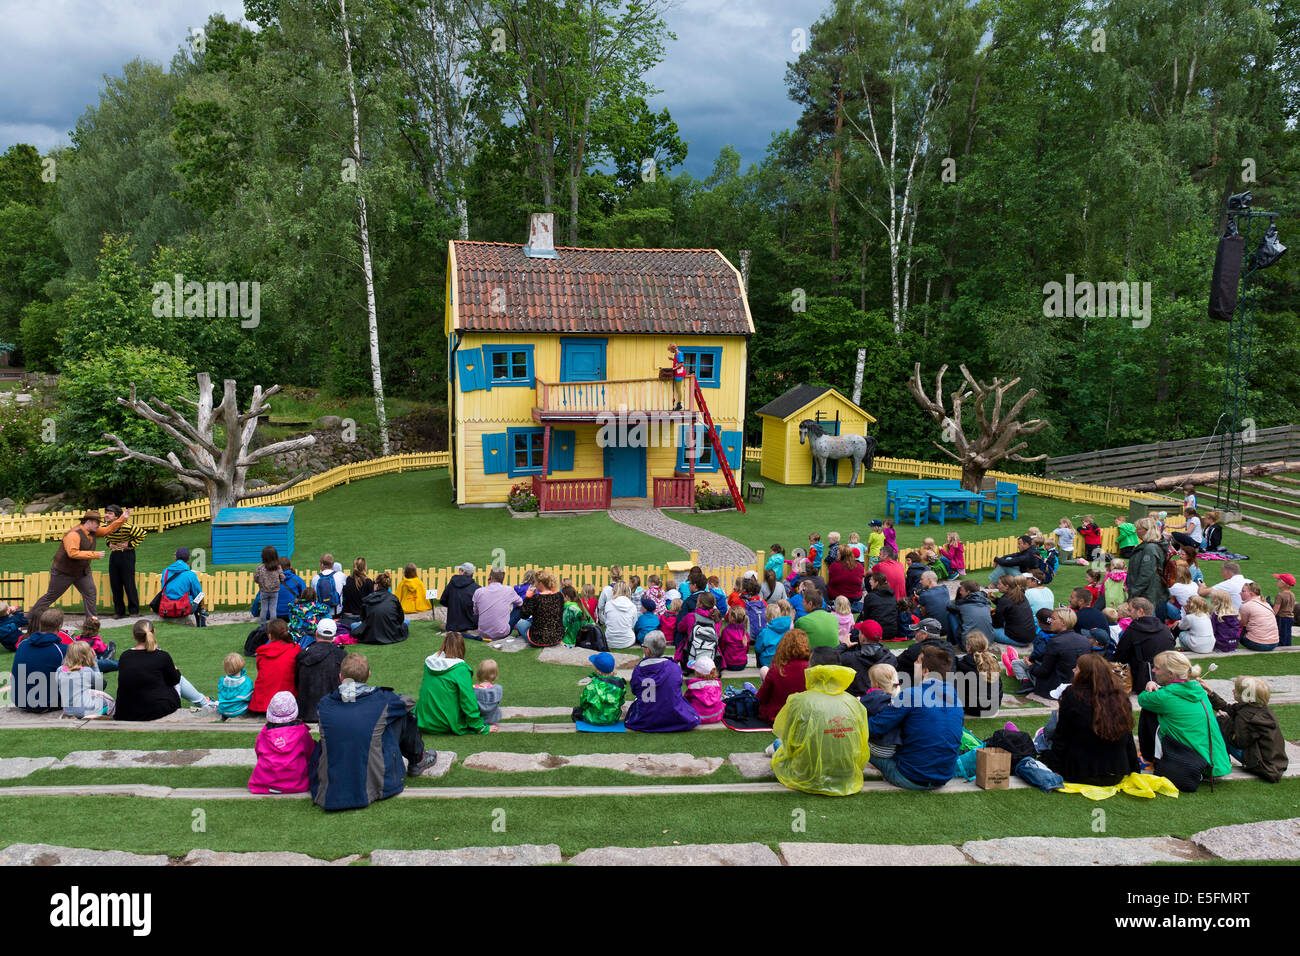 Villa Villekulla, viewers watching a scene from the children's book 'Pippi Longstocking' by children's author Astrid Lindgren, Stock Photo